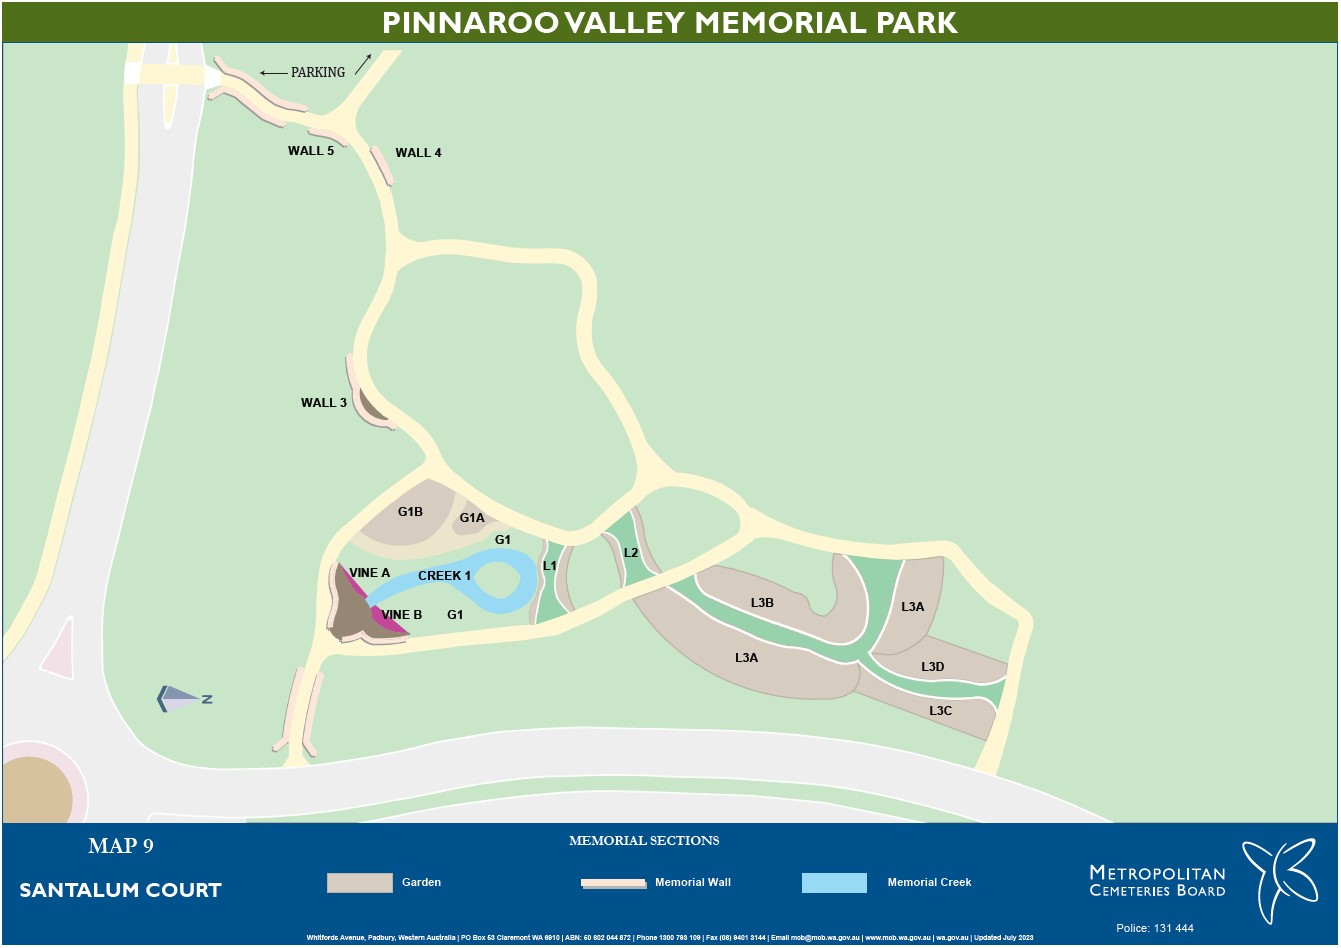 Map 9 Santalum Court Pinnaroo Valley Memorial Park